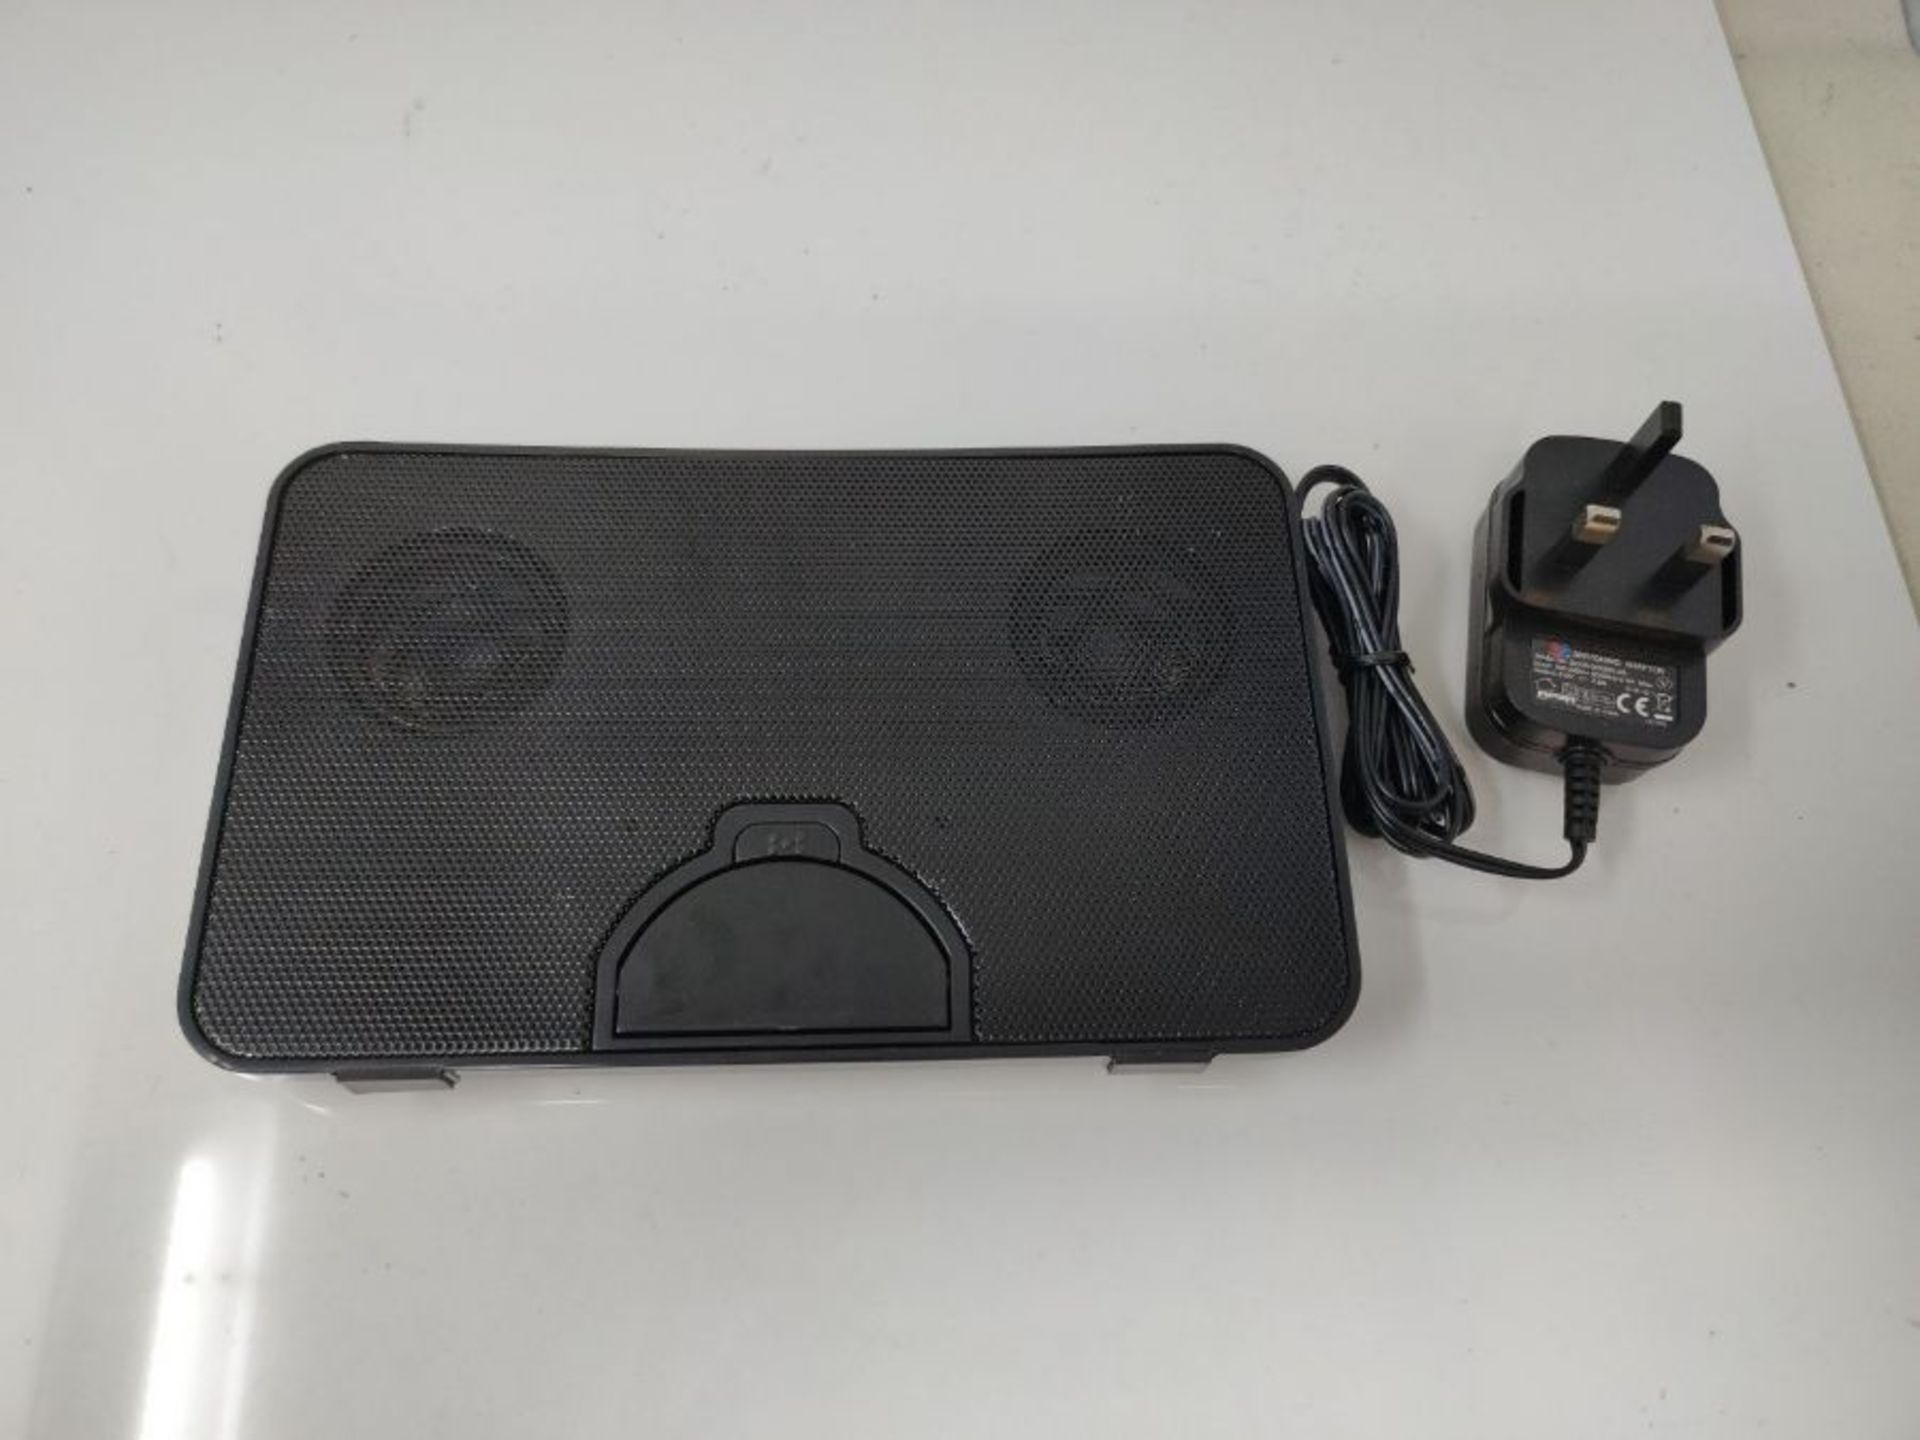 Bush Portable Speaker Dock - Black - Image 3 of 3